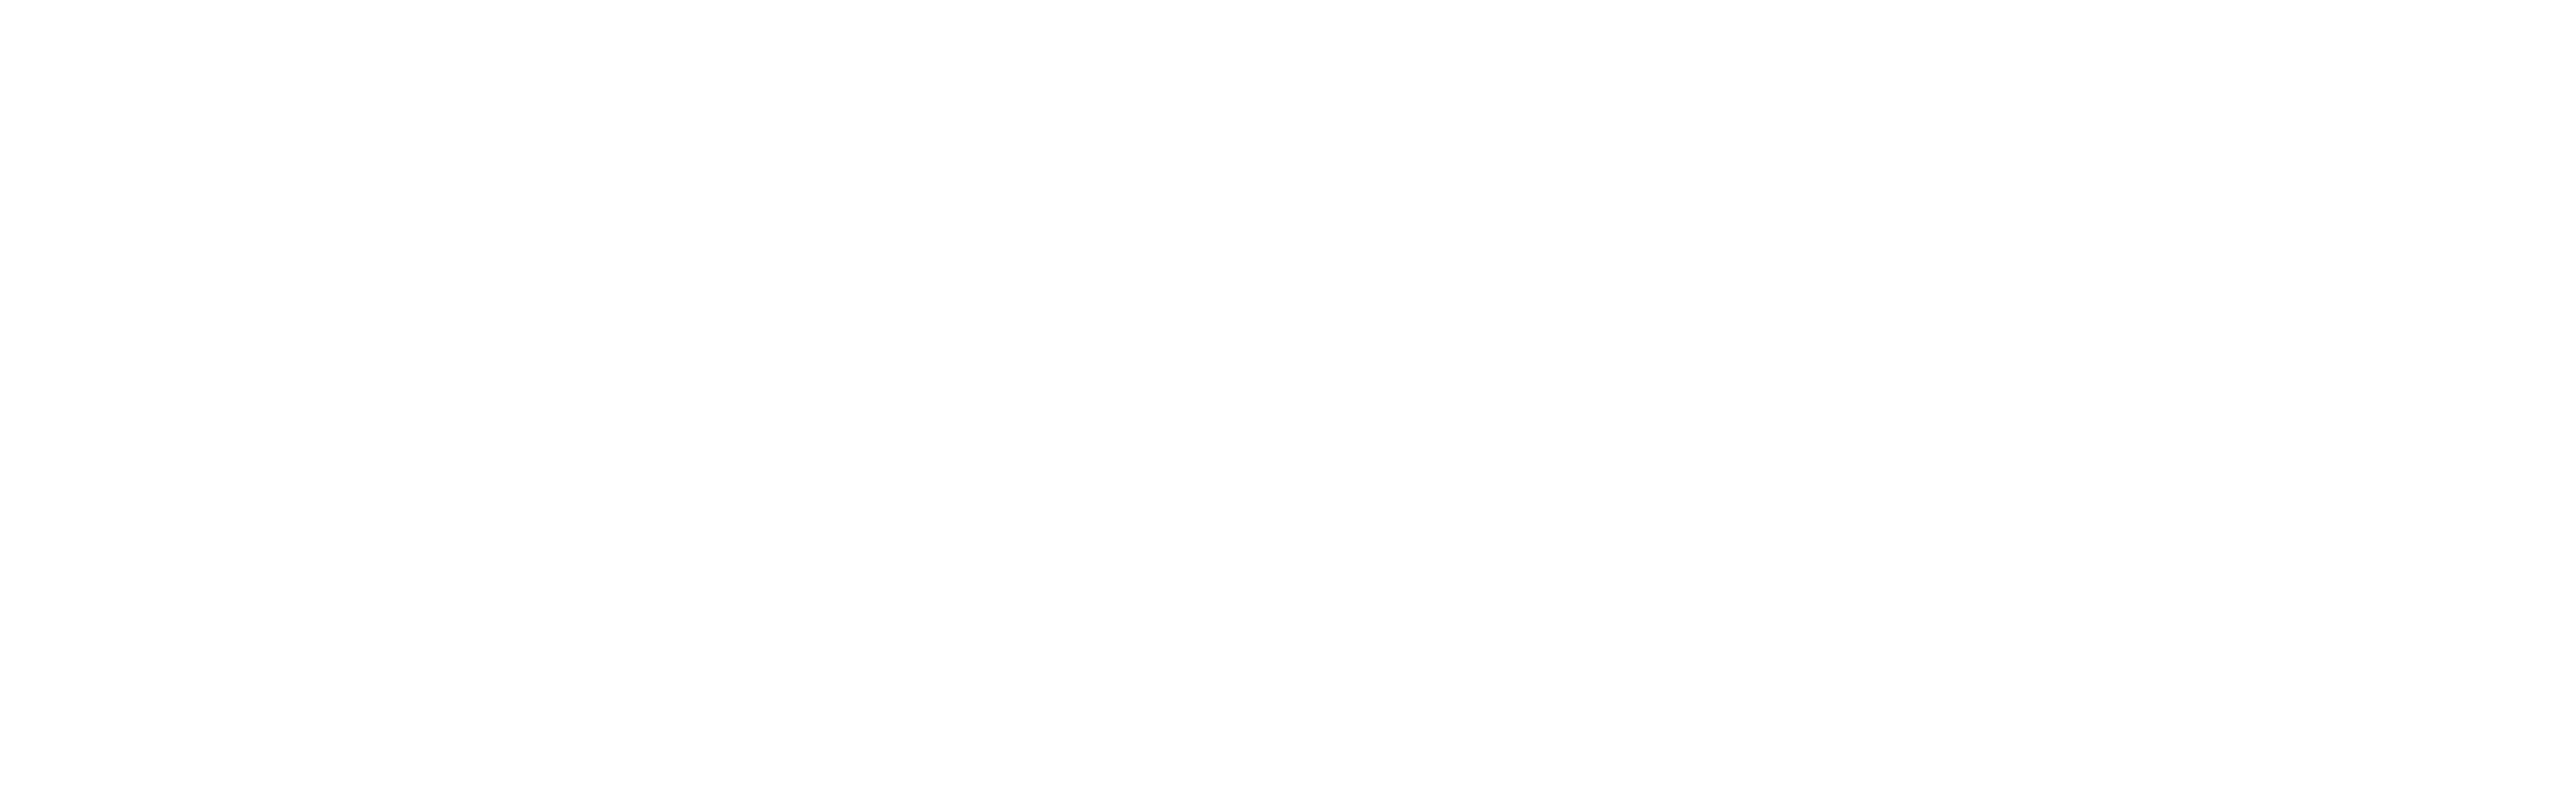 Mechanical Rock